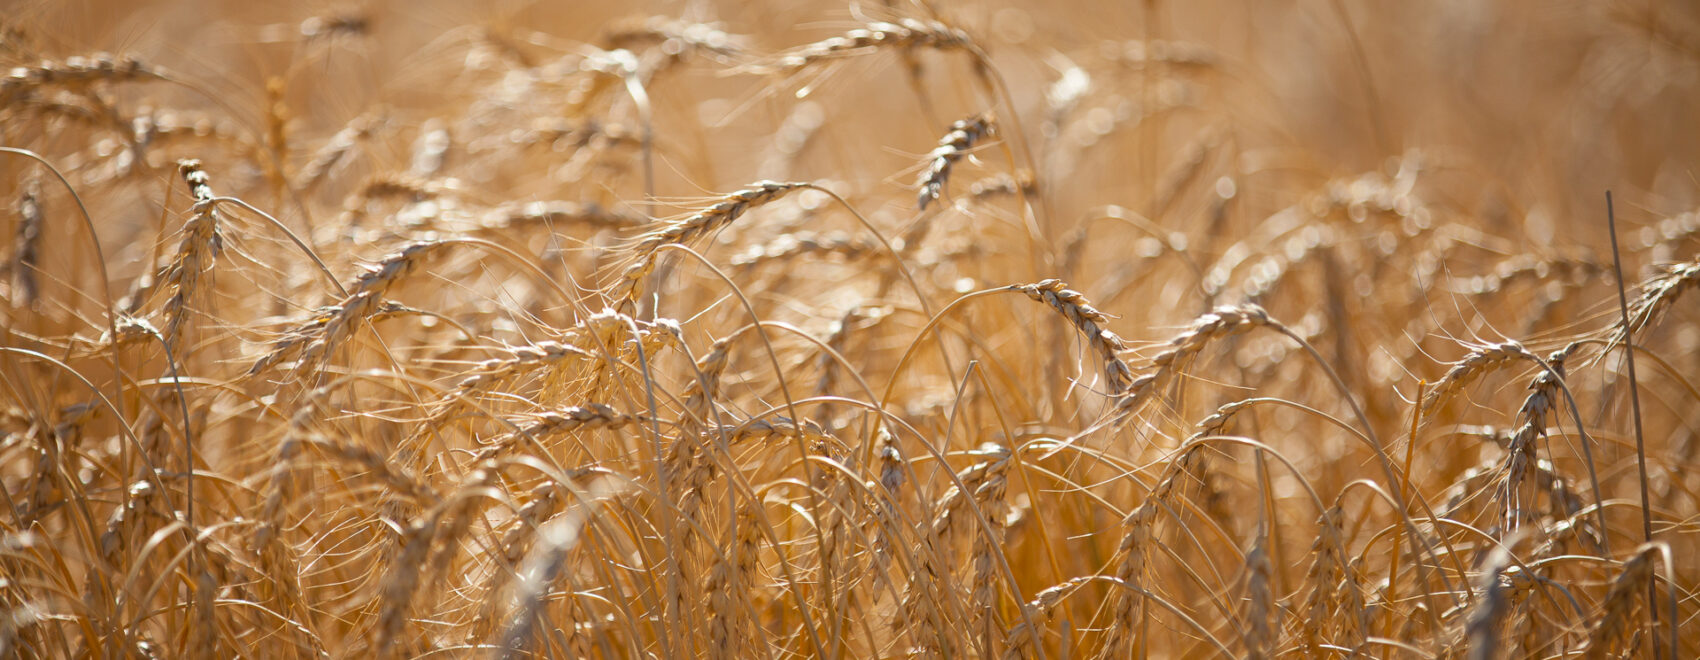 photo of a wheat field